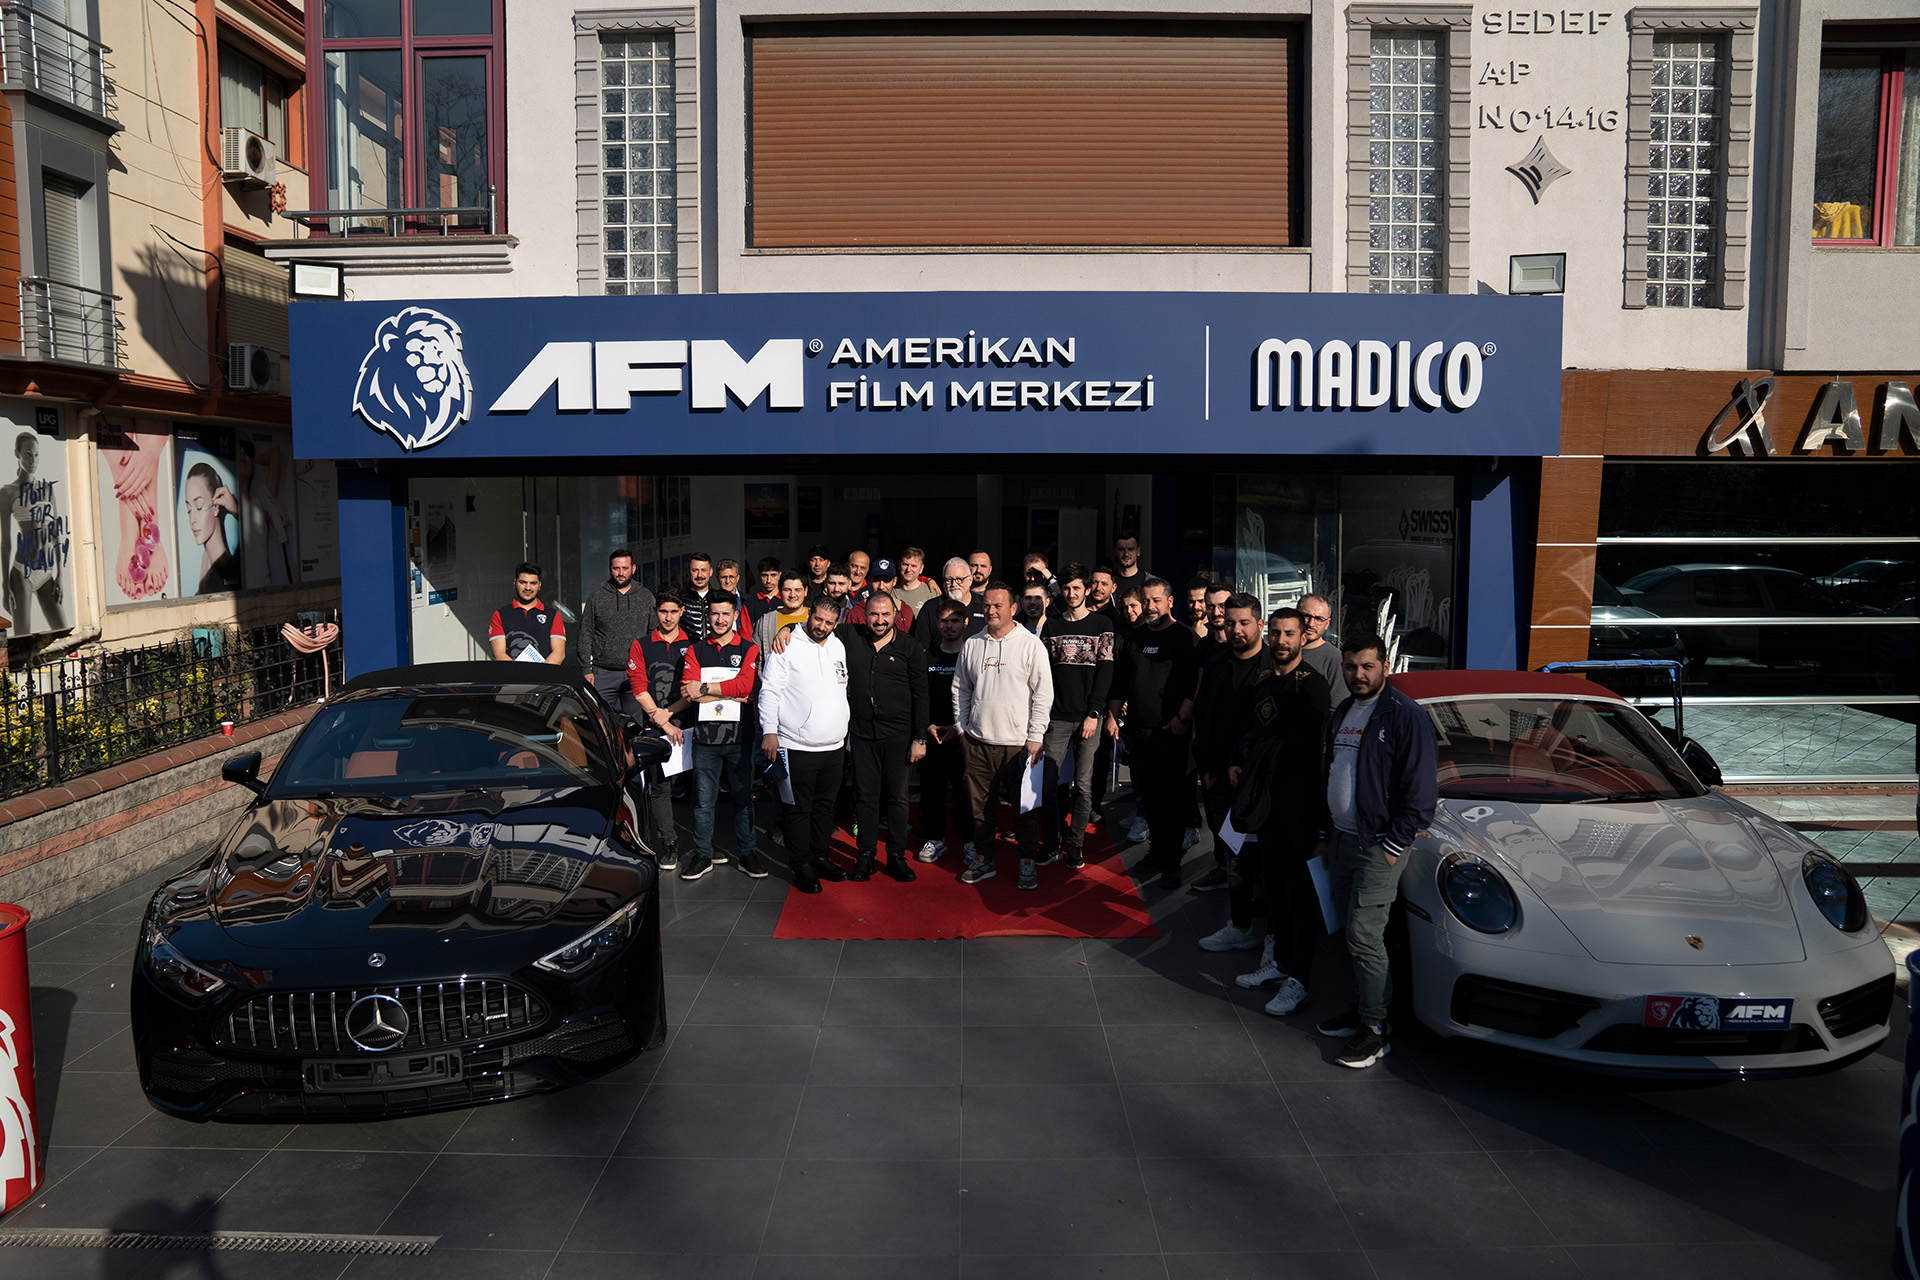 Madico Üniversitesi Amerikan Film Merkezi (AFM) İstanbul Eğitimi